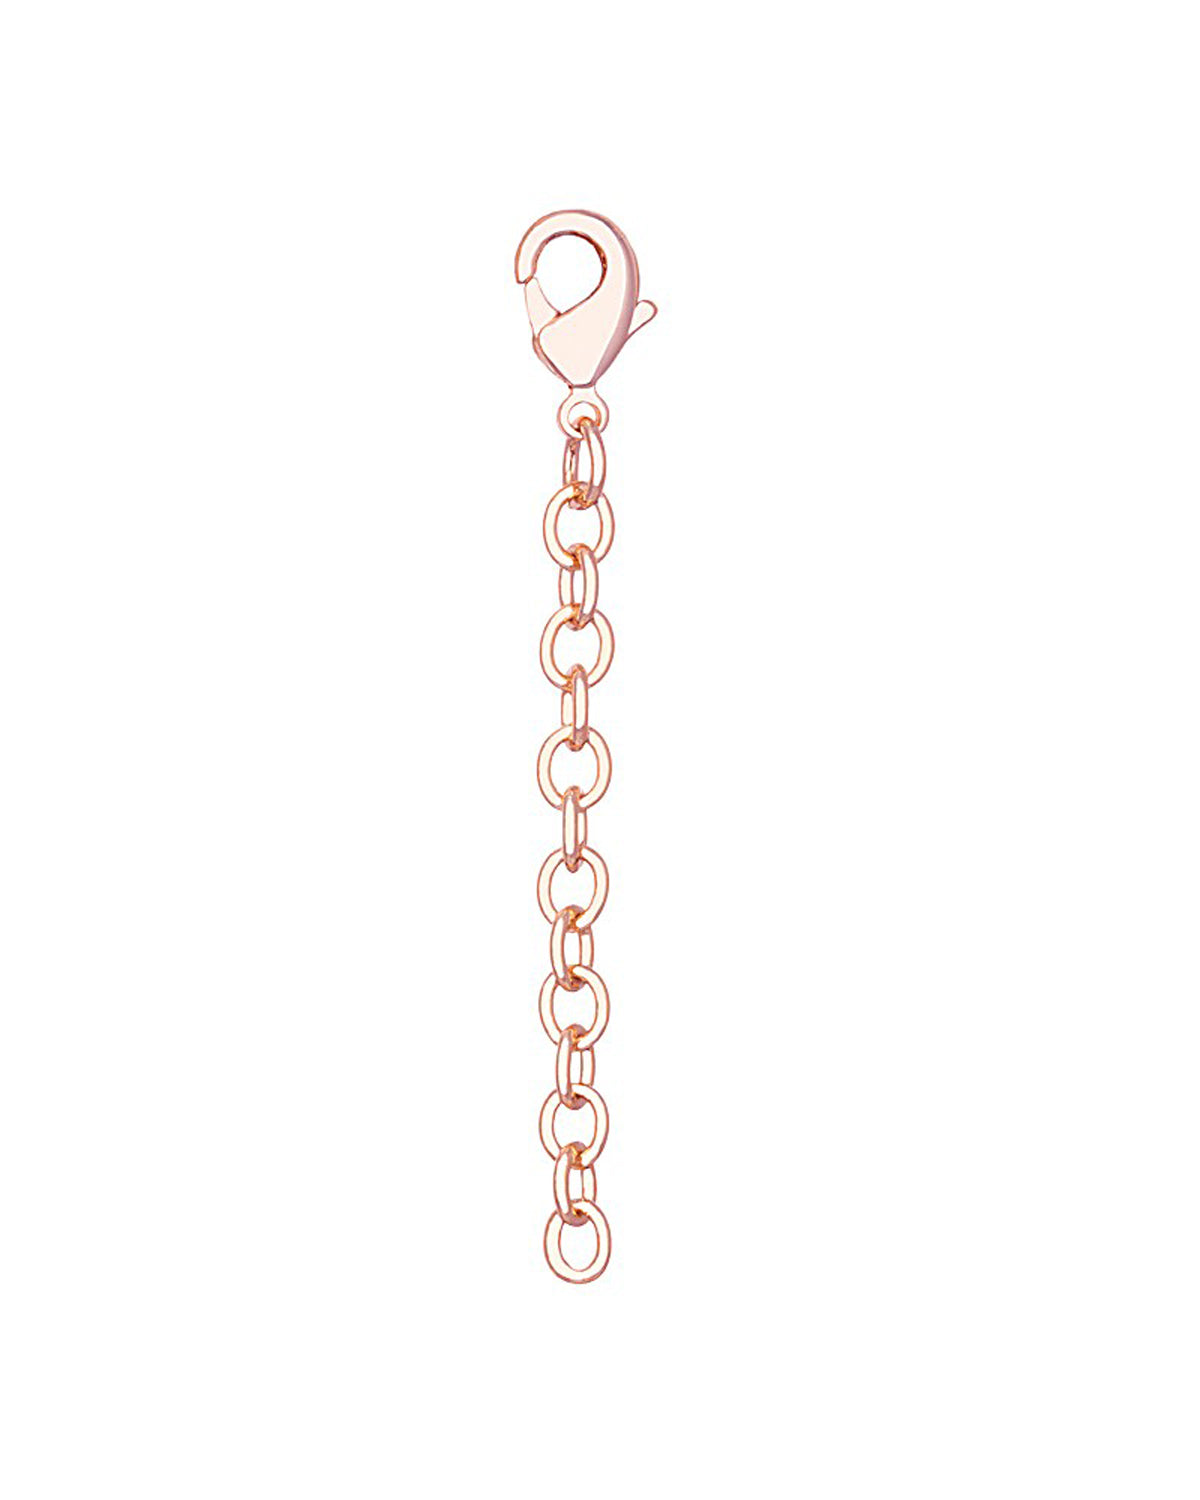 Kendra Scott 2" Lobster Claw Necklace Bracelet Extender in Rose Gold Plated